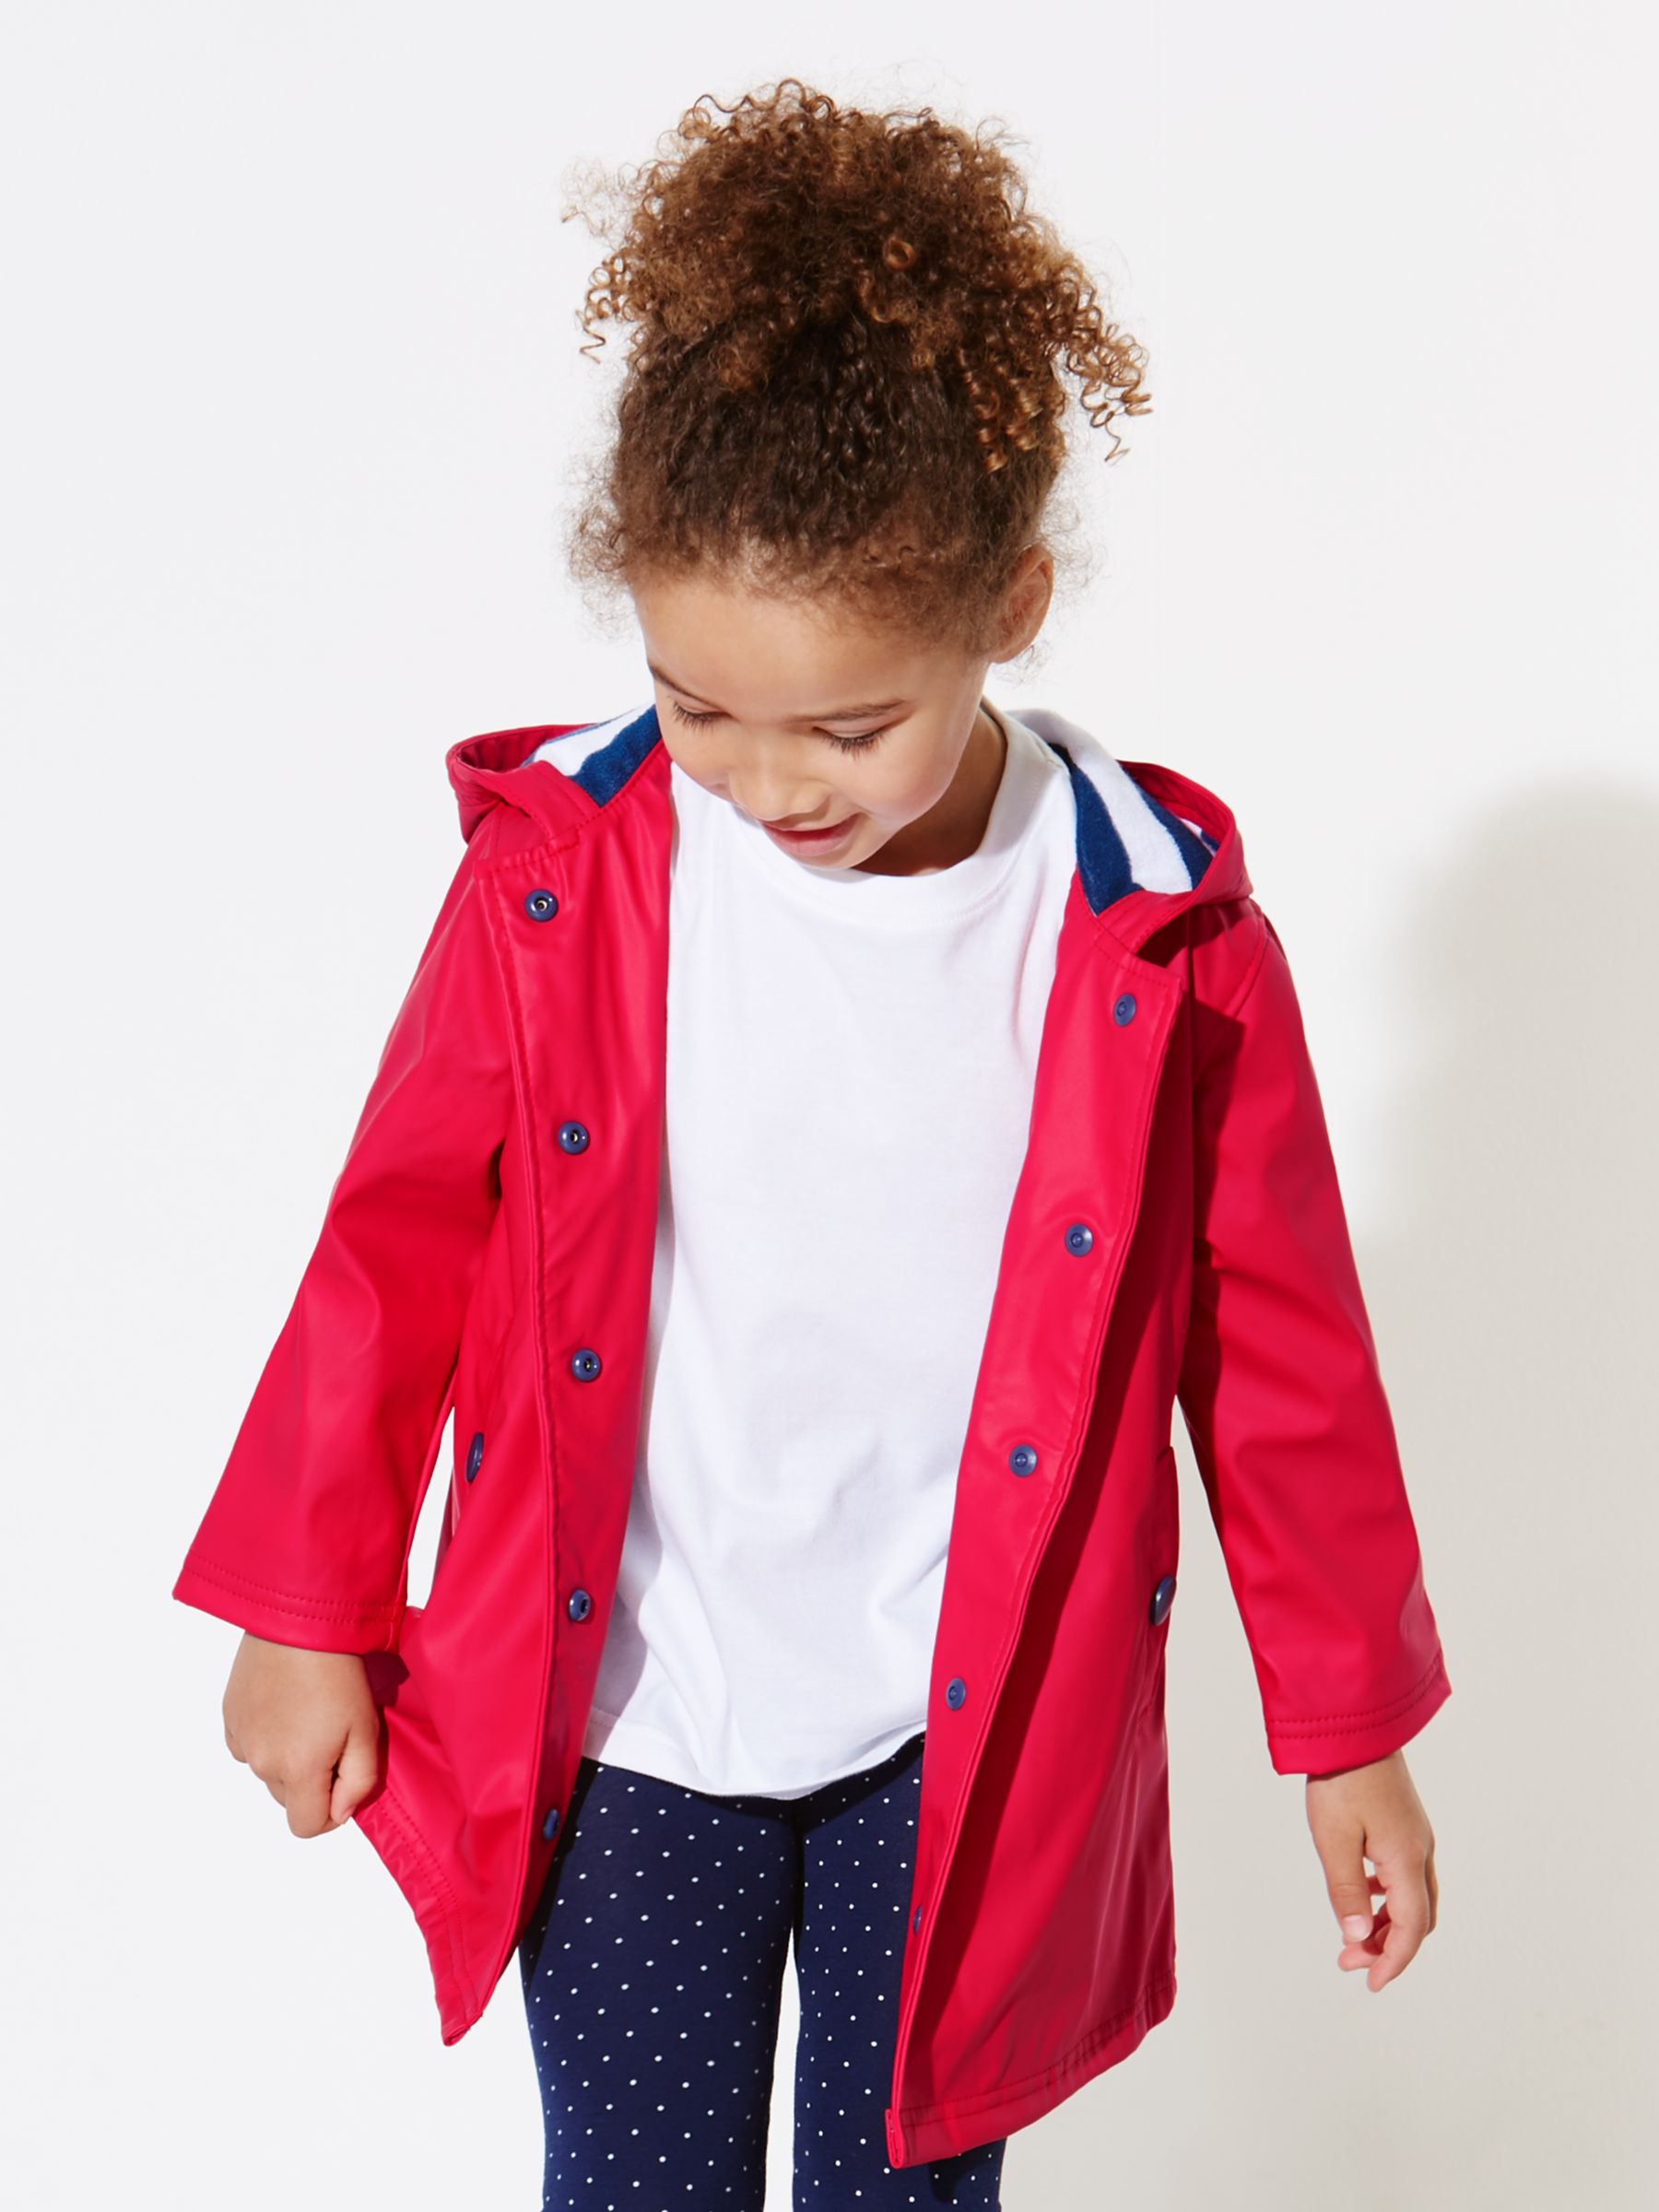 Hatley Girls' Splash Jacket, Red, 5 years